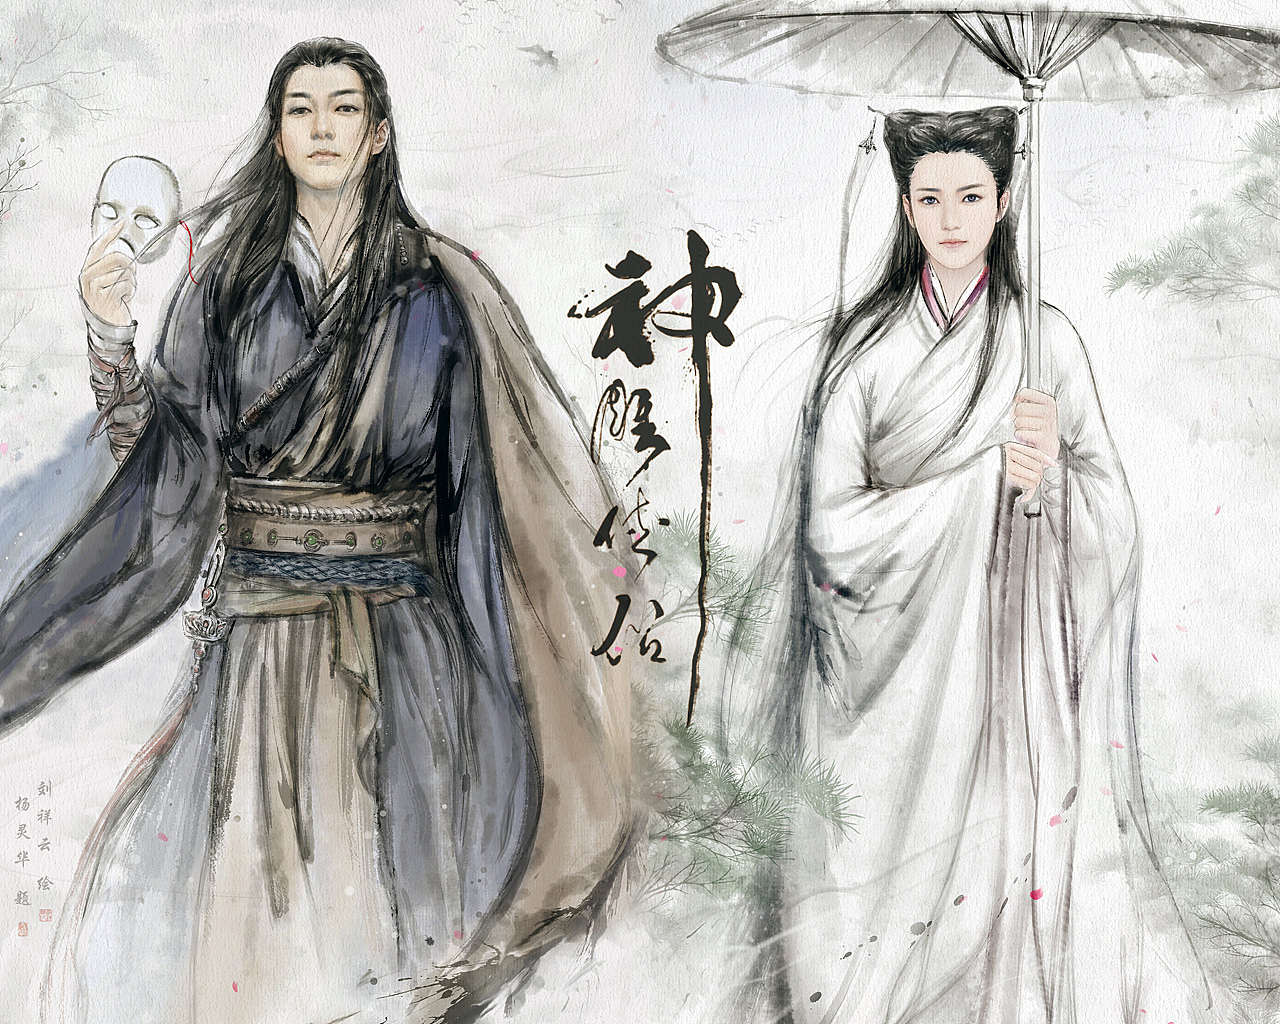 General 1280x1024 Wuxia digital art CGI original characters fantasy girl hiLiuyun